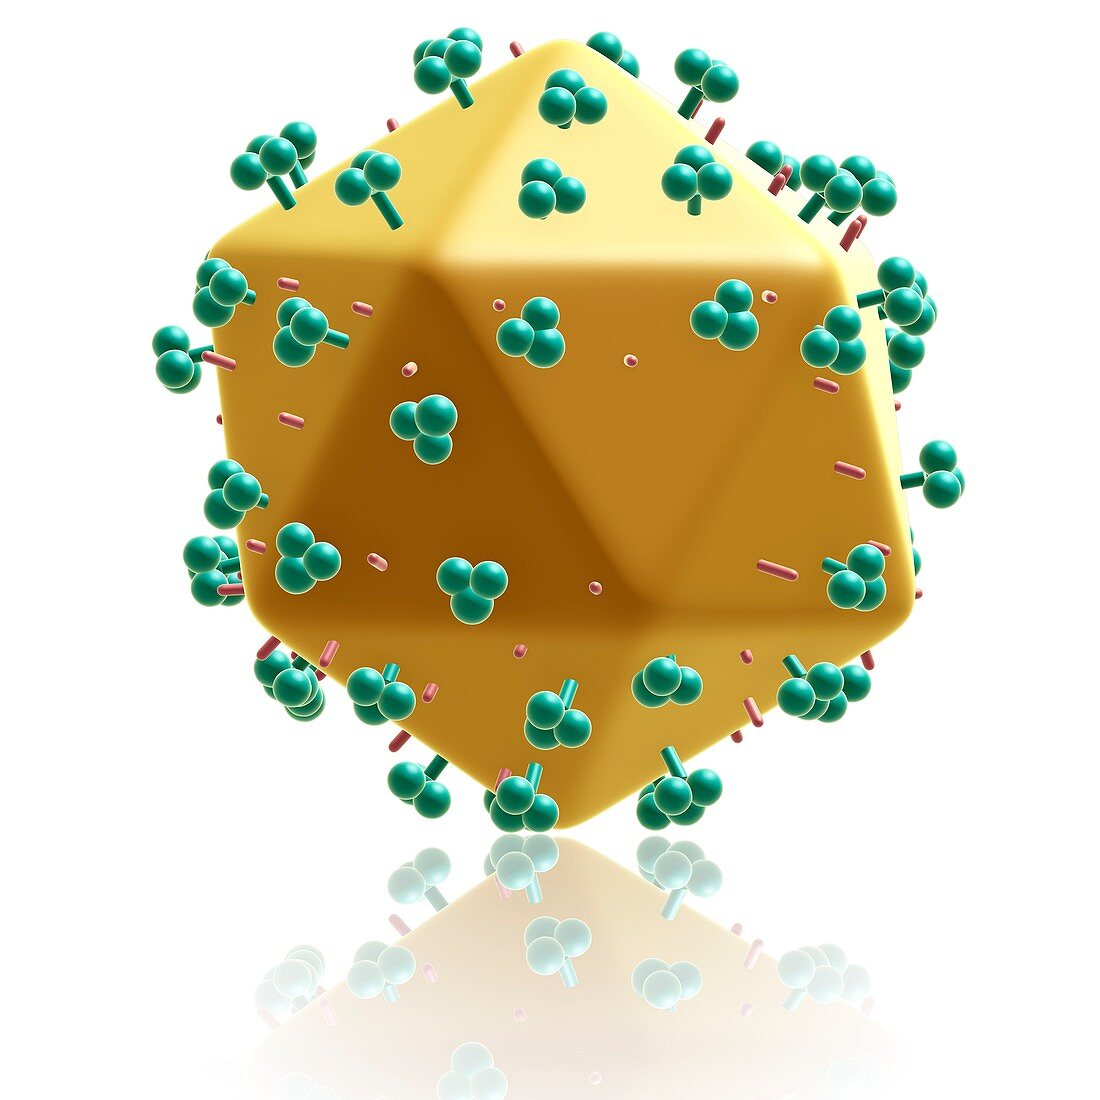 AIDS virus particle, illustration